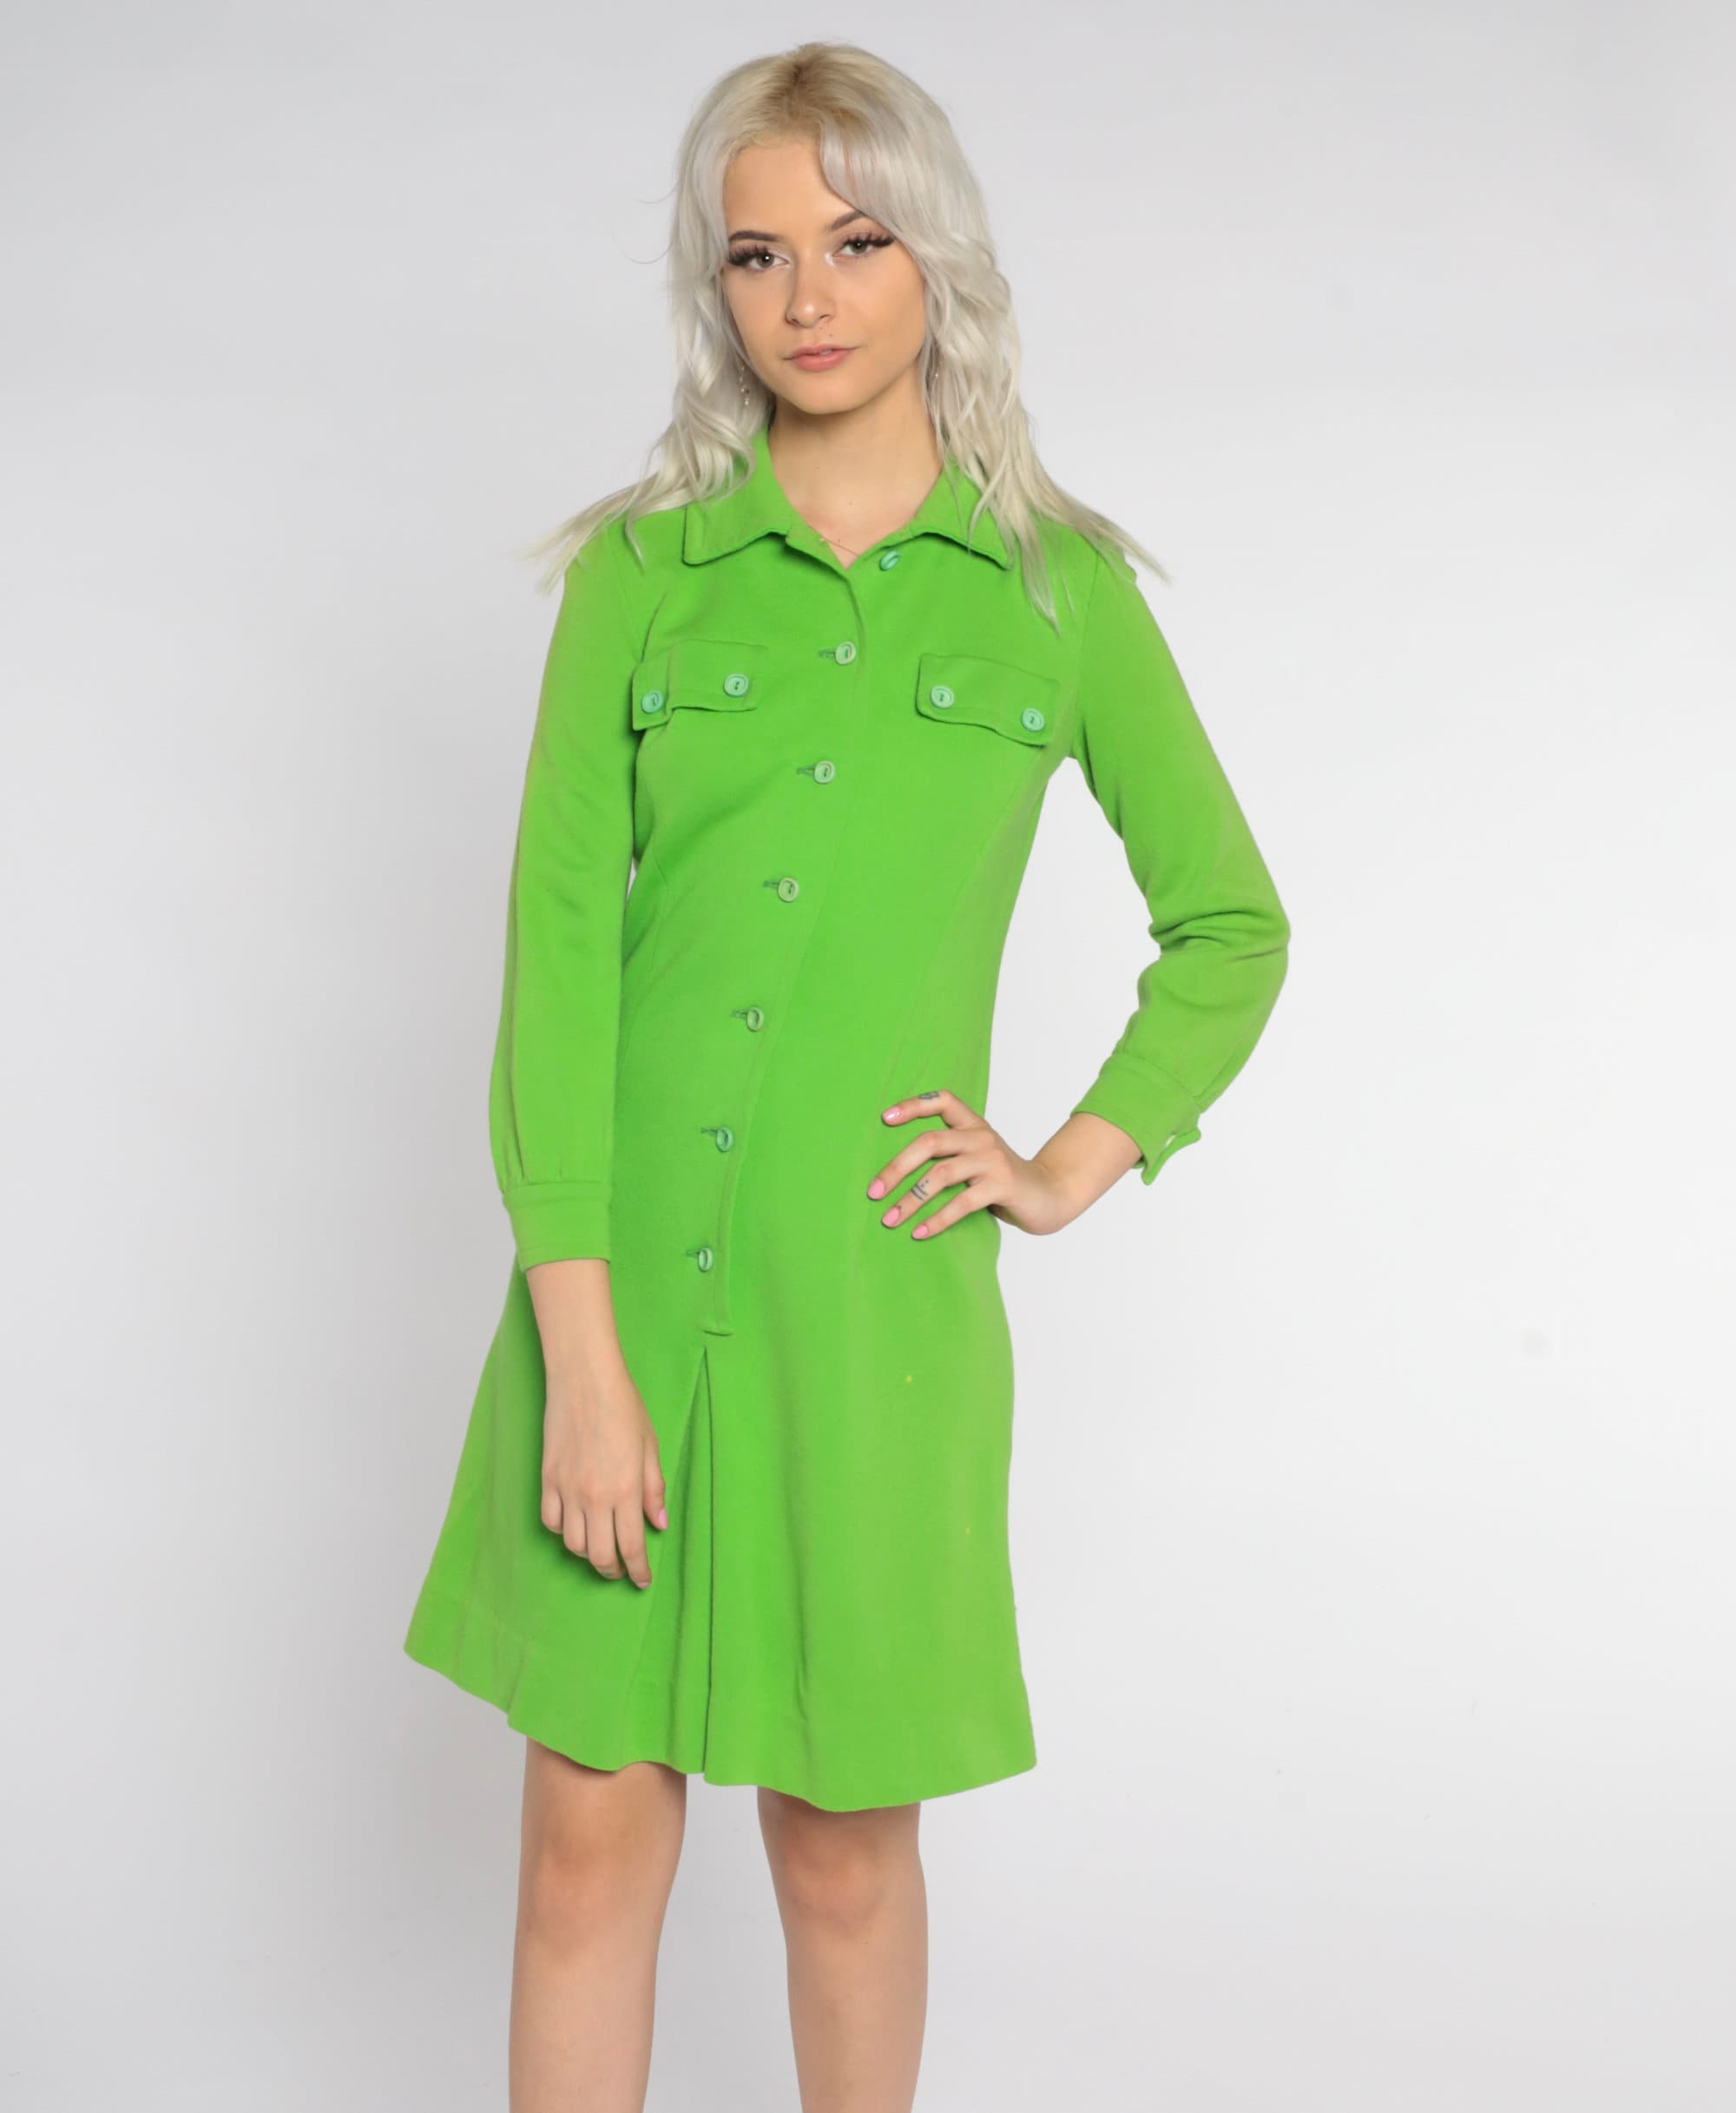 Lime Green Wool Dress 60s Mod Mini Dress Retro Collared Button Up ...